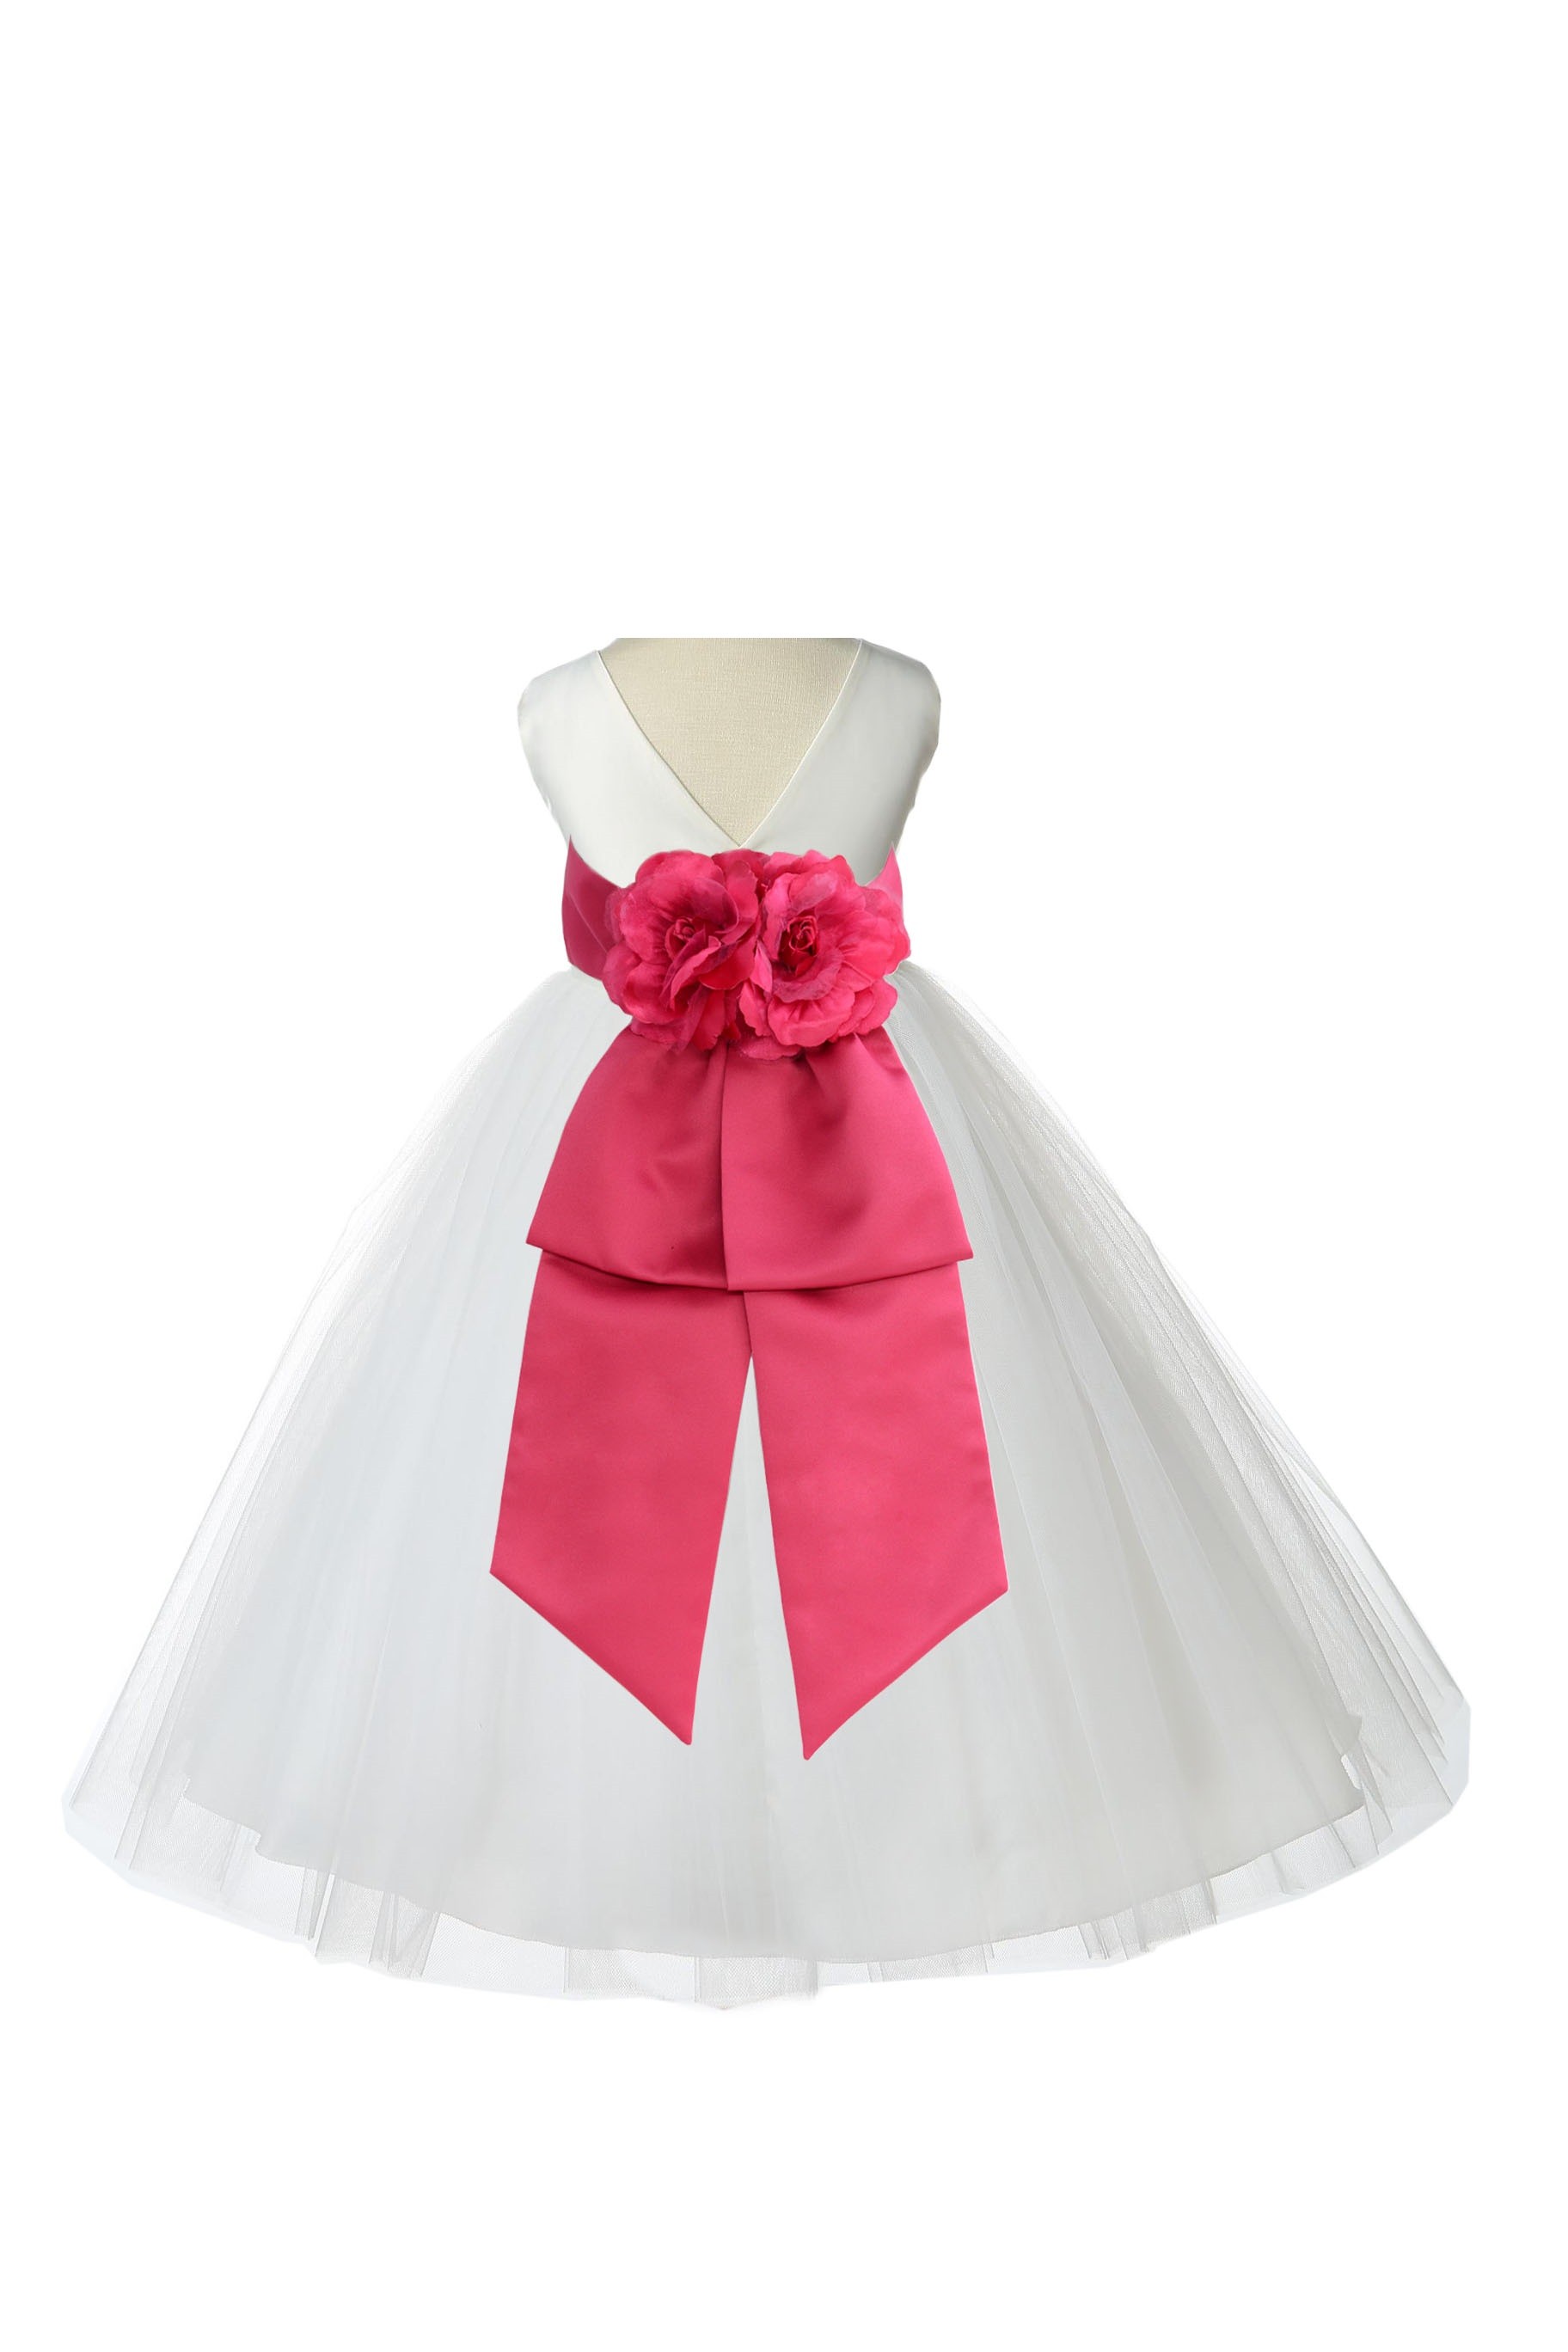 V-Neck Tulle Ivory/Watermelon Flower Girl Dress Wedding Pageant 108